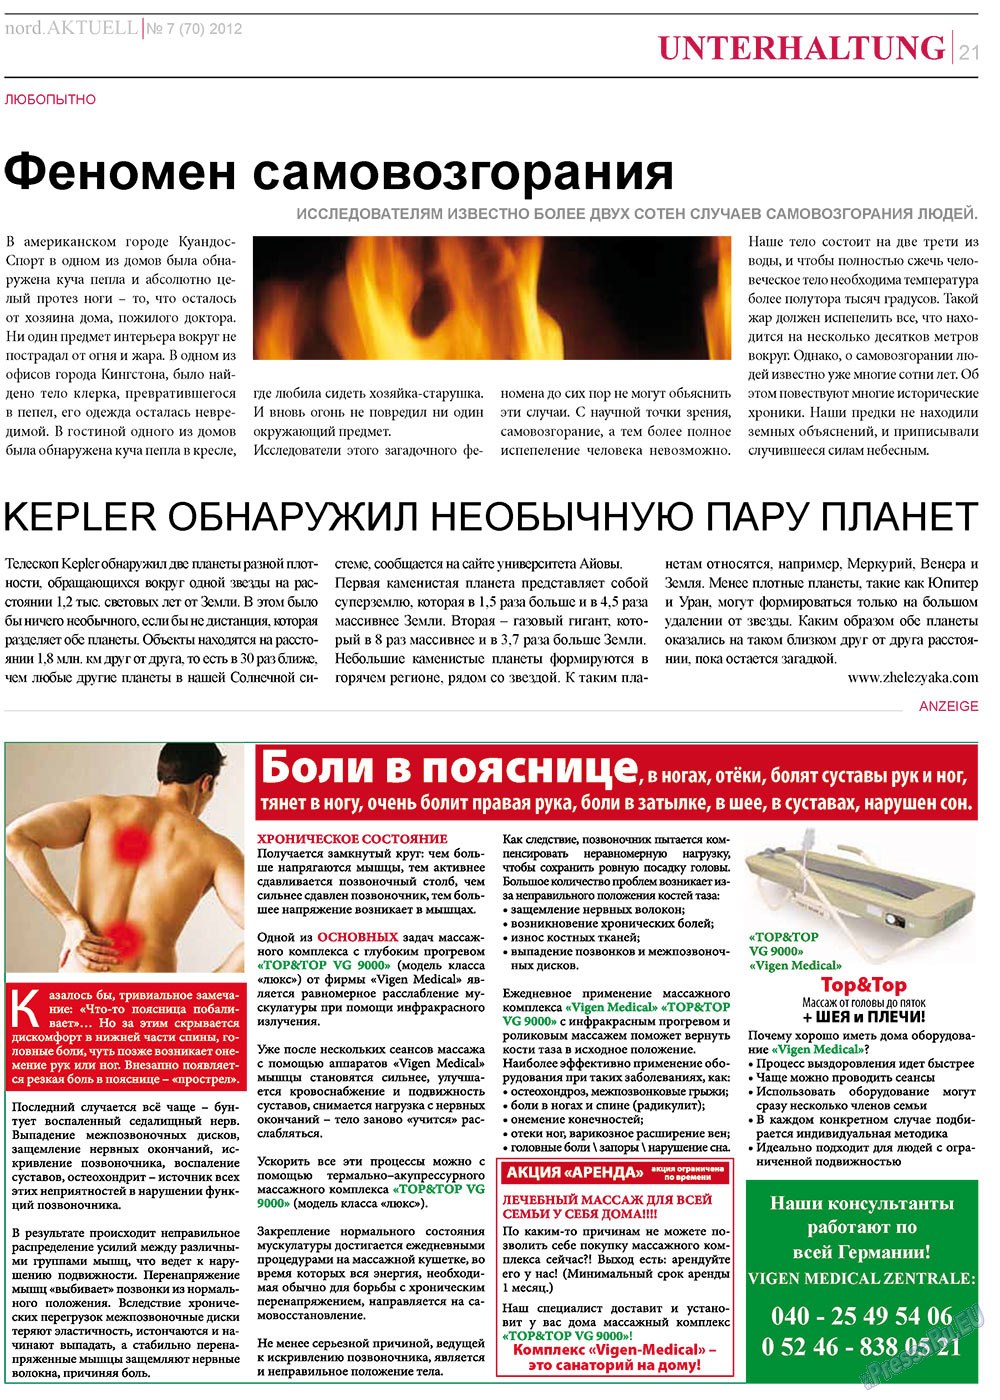 nord.Aktuell, газета. 2012 №7 стр.21